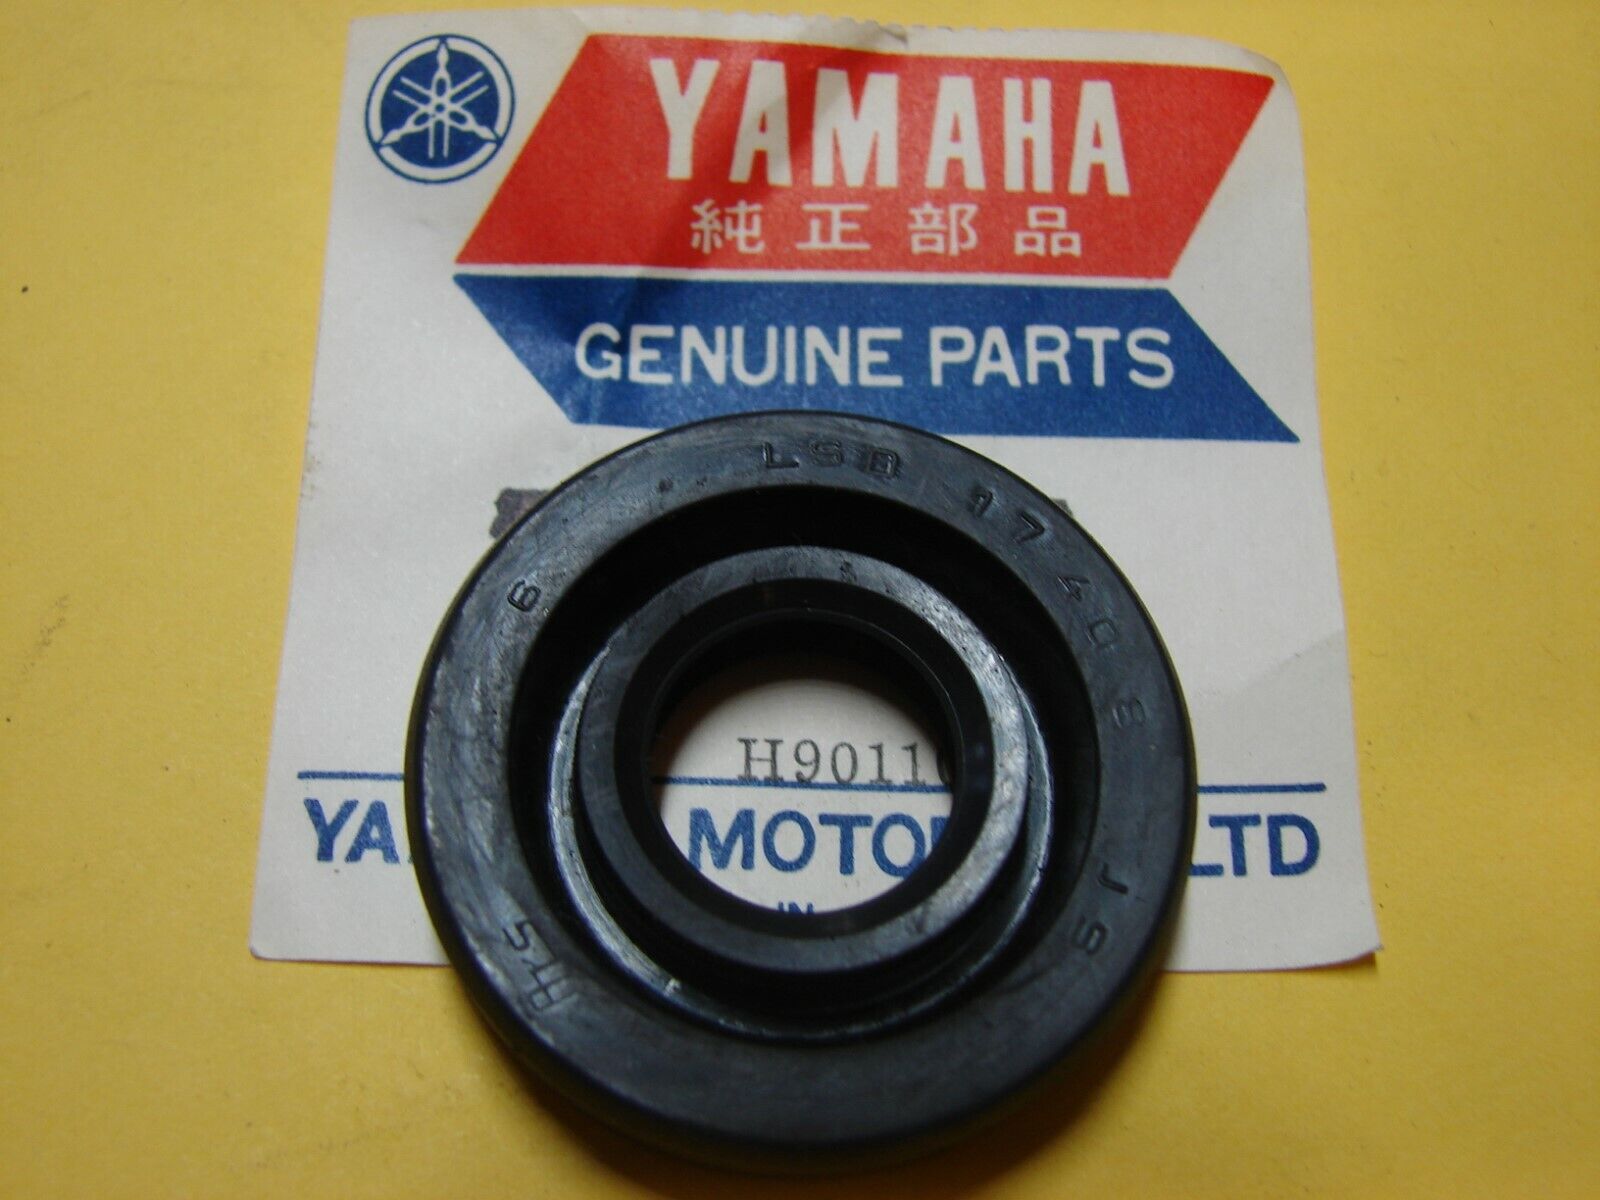 NOS OEM Yamaha Seal 93102-17005-00